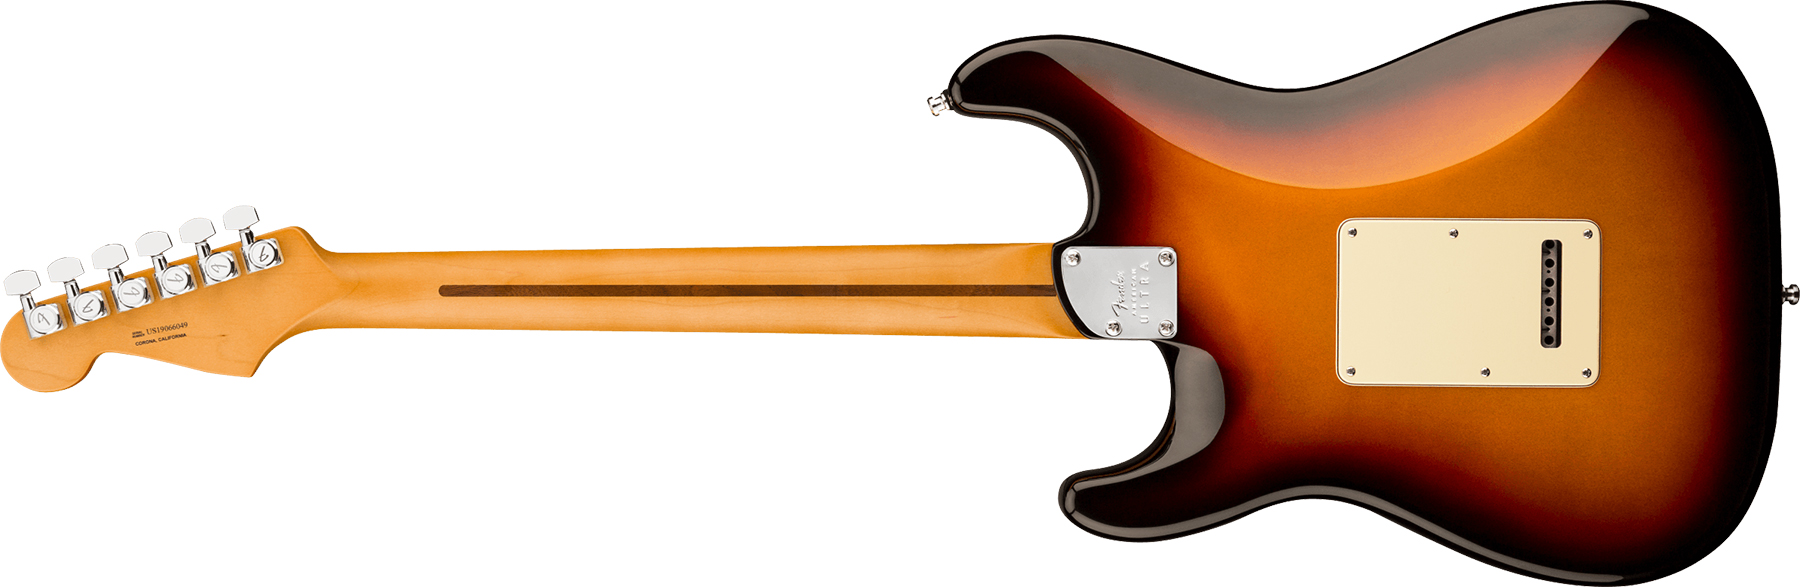 Fender Strat American Ultra Hss 2019 Usa Rw - Ultraburst - Str shape electric guitar - Variation 1